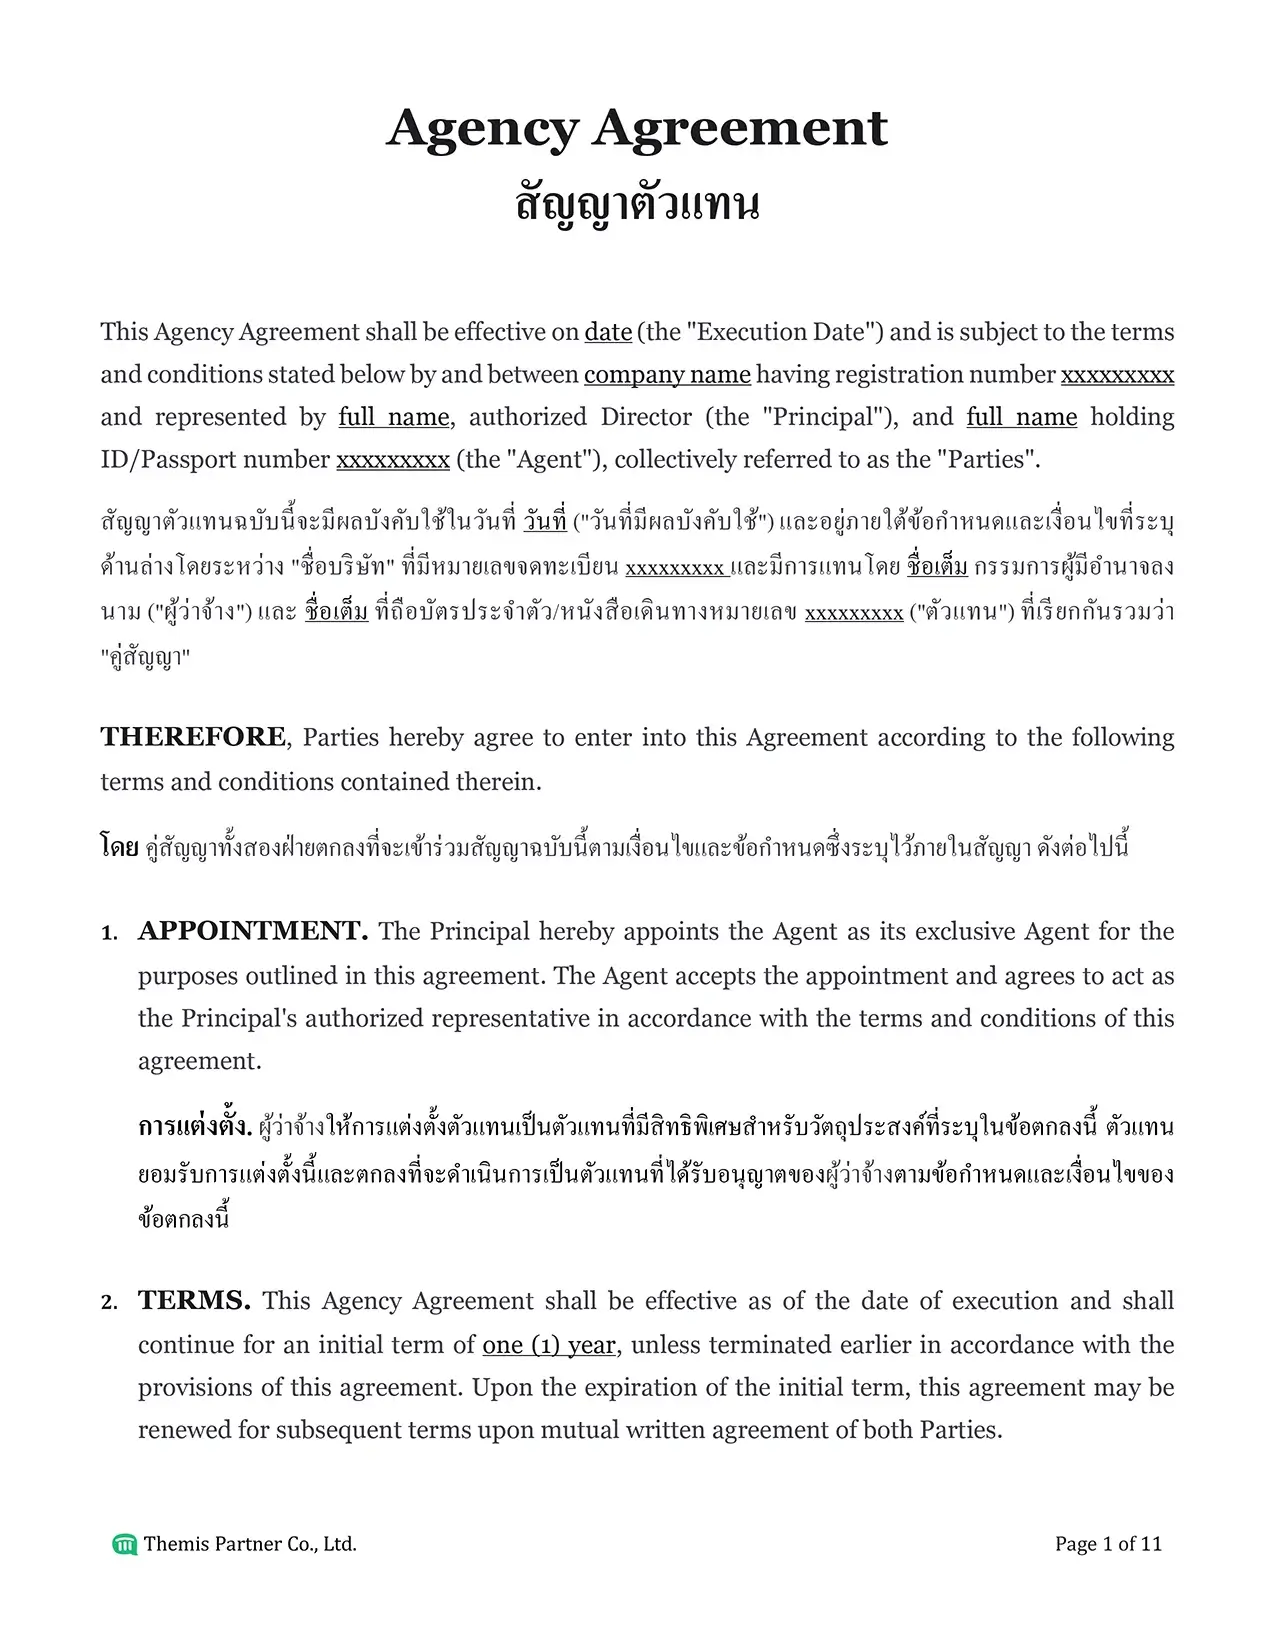 Agency agreement Thailand